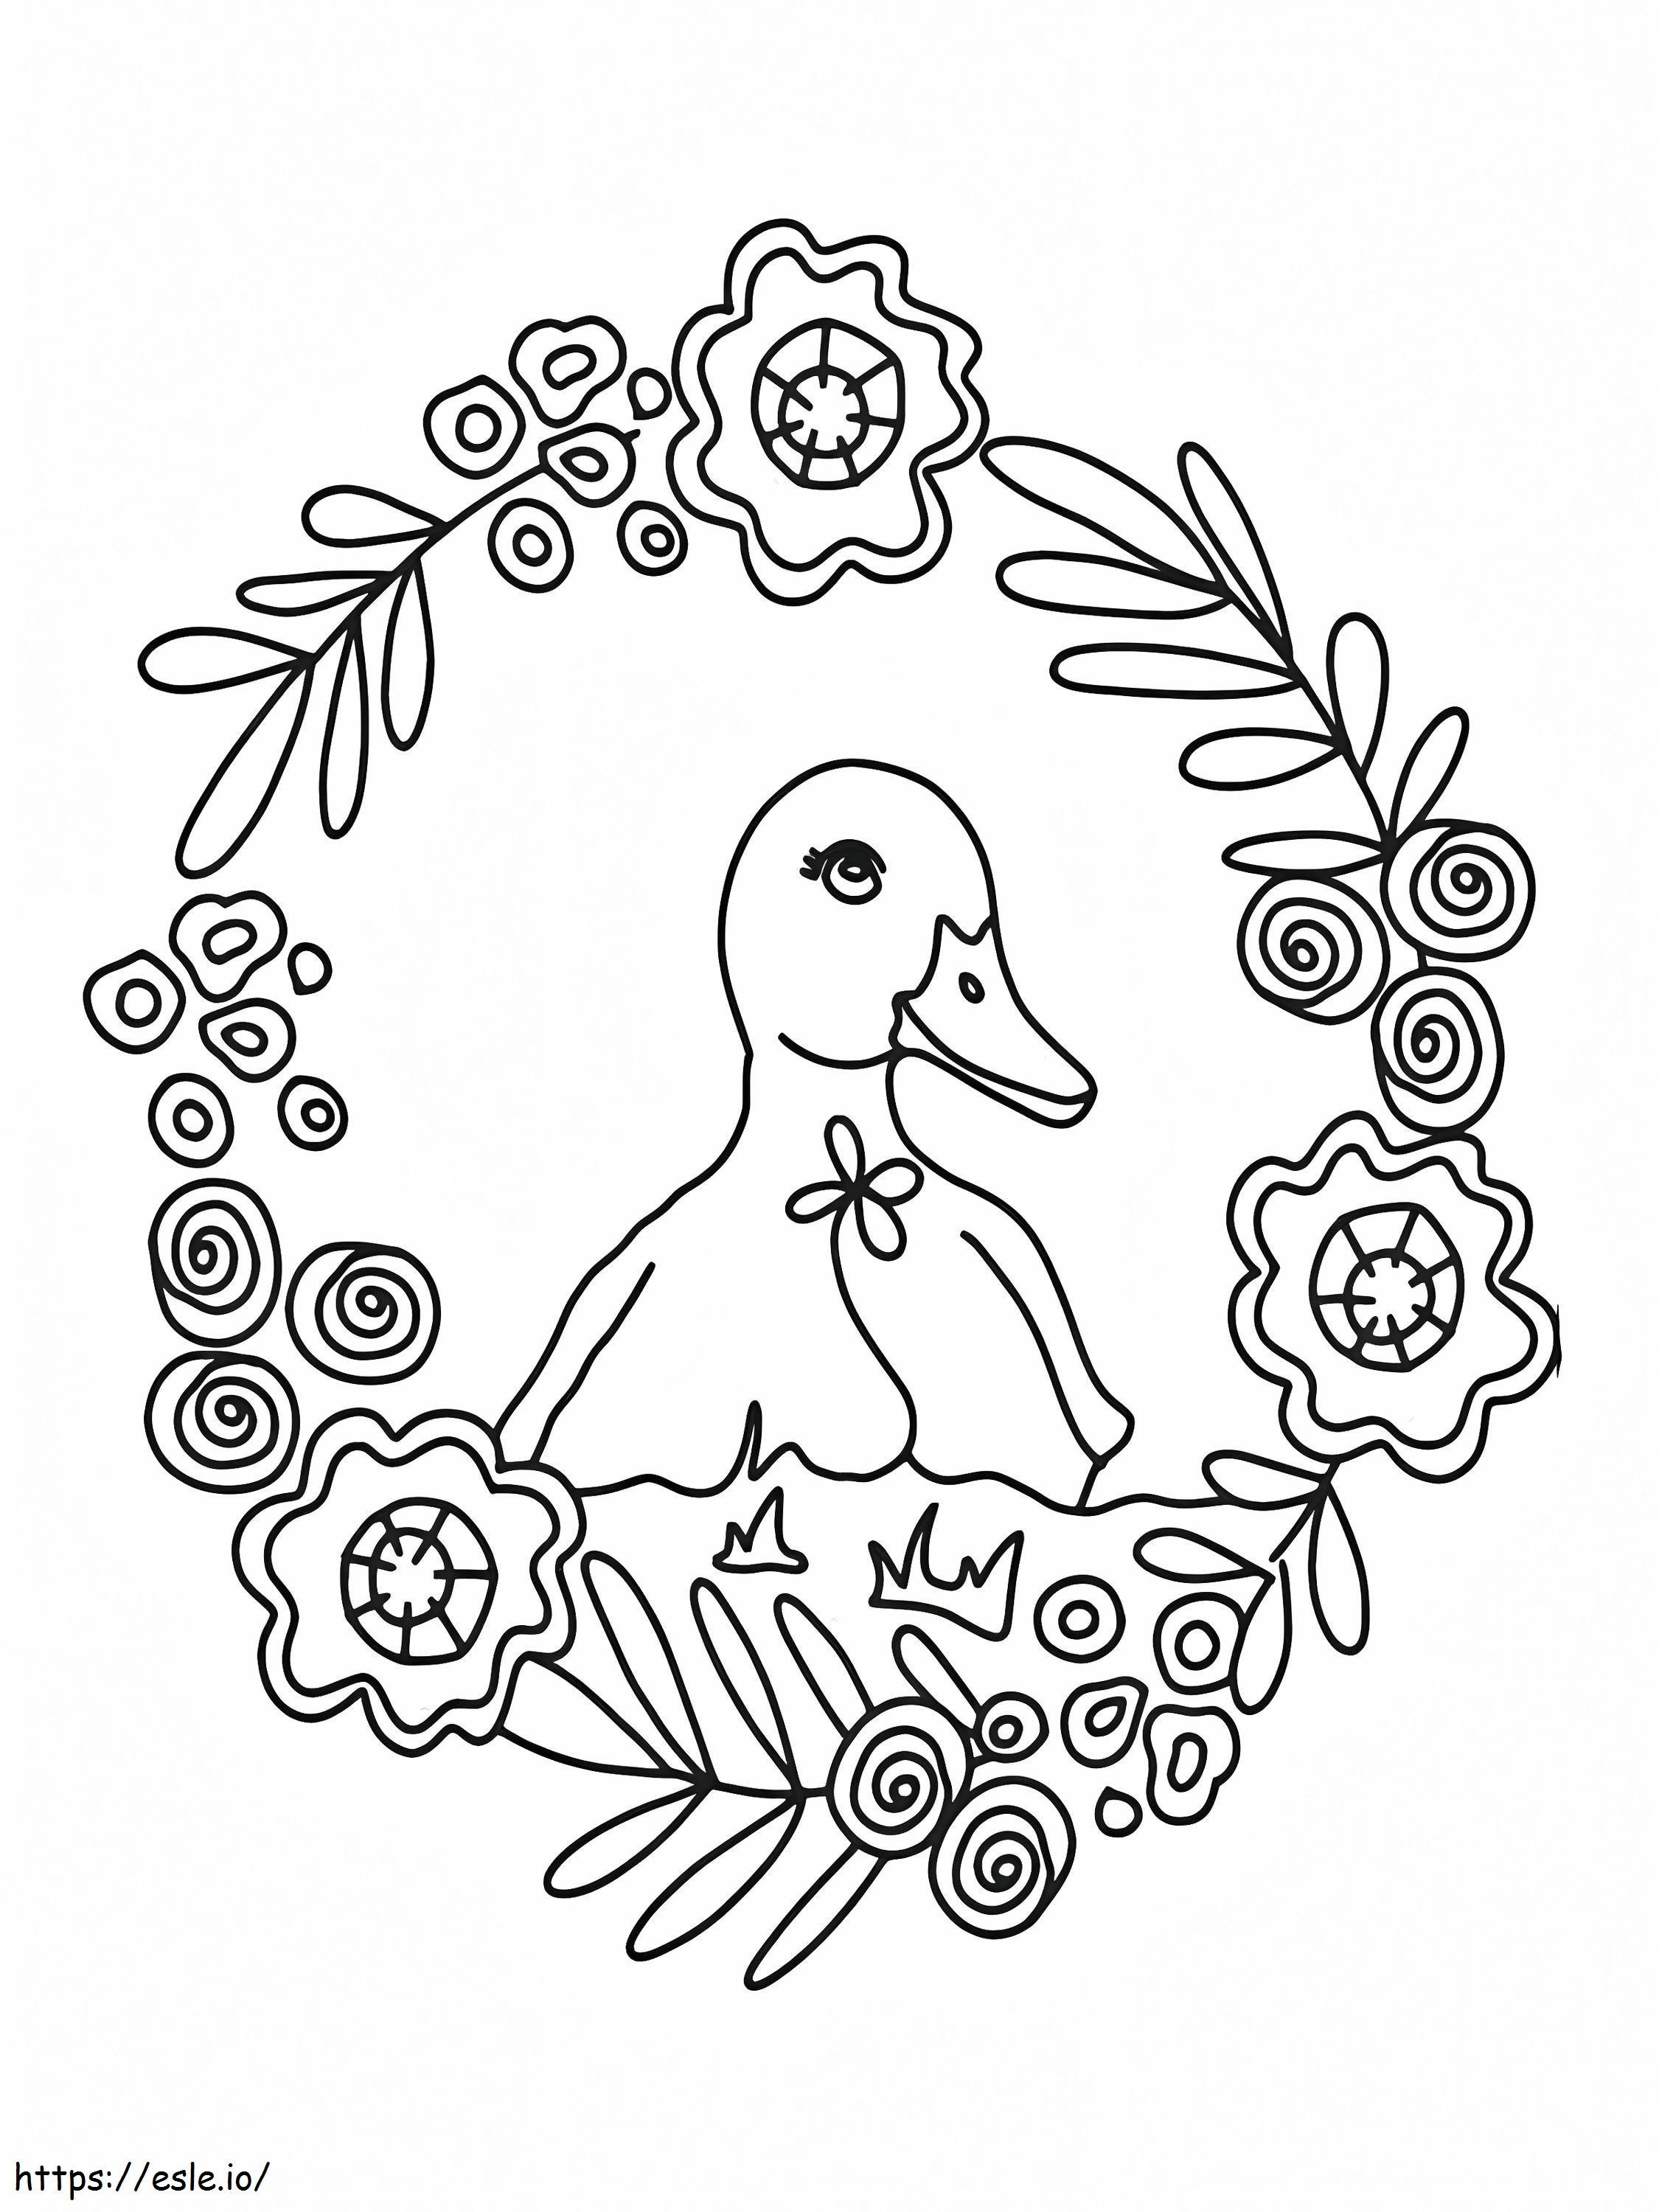 Coloriage Magnifique canard de Pâques à imprimer dessin